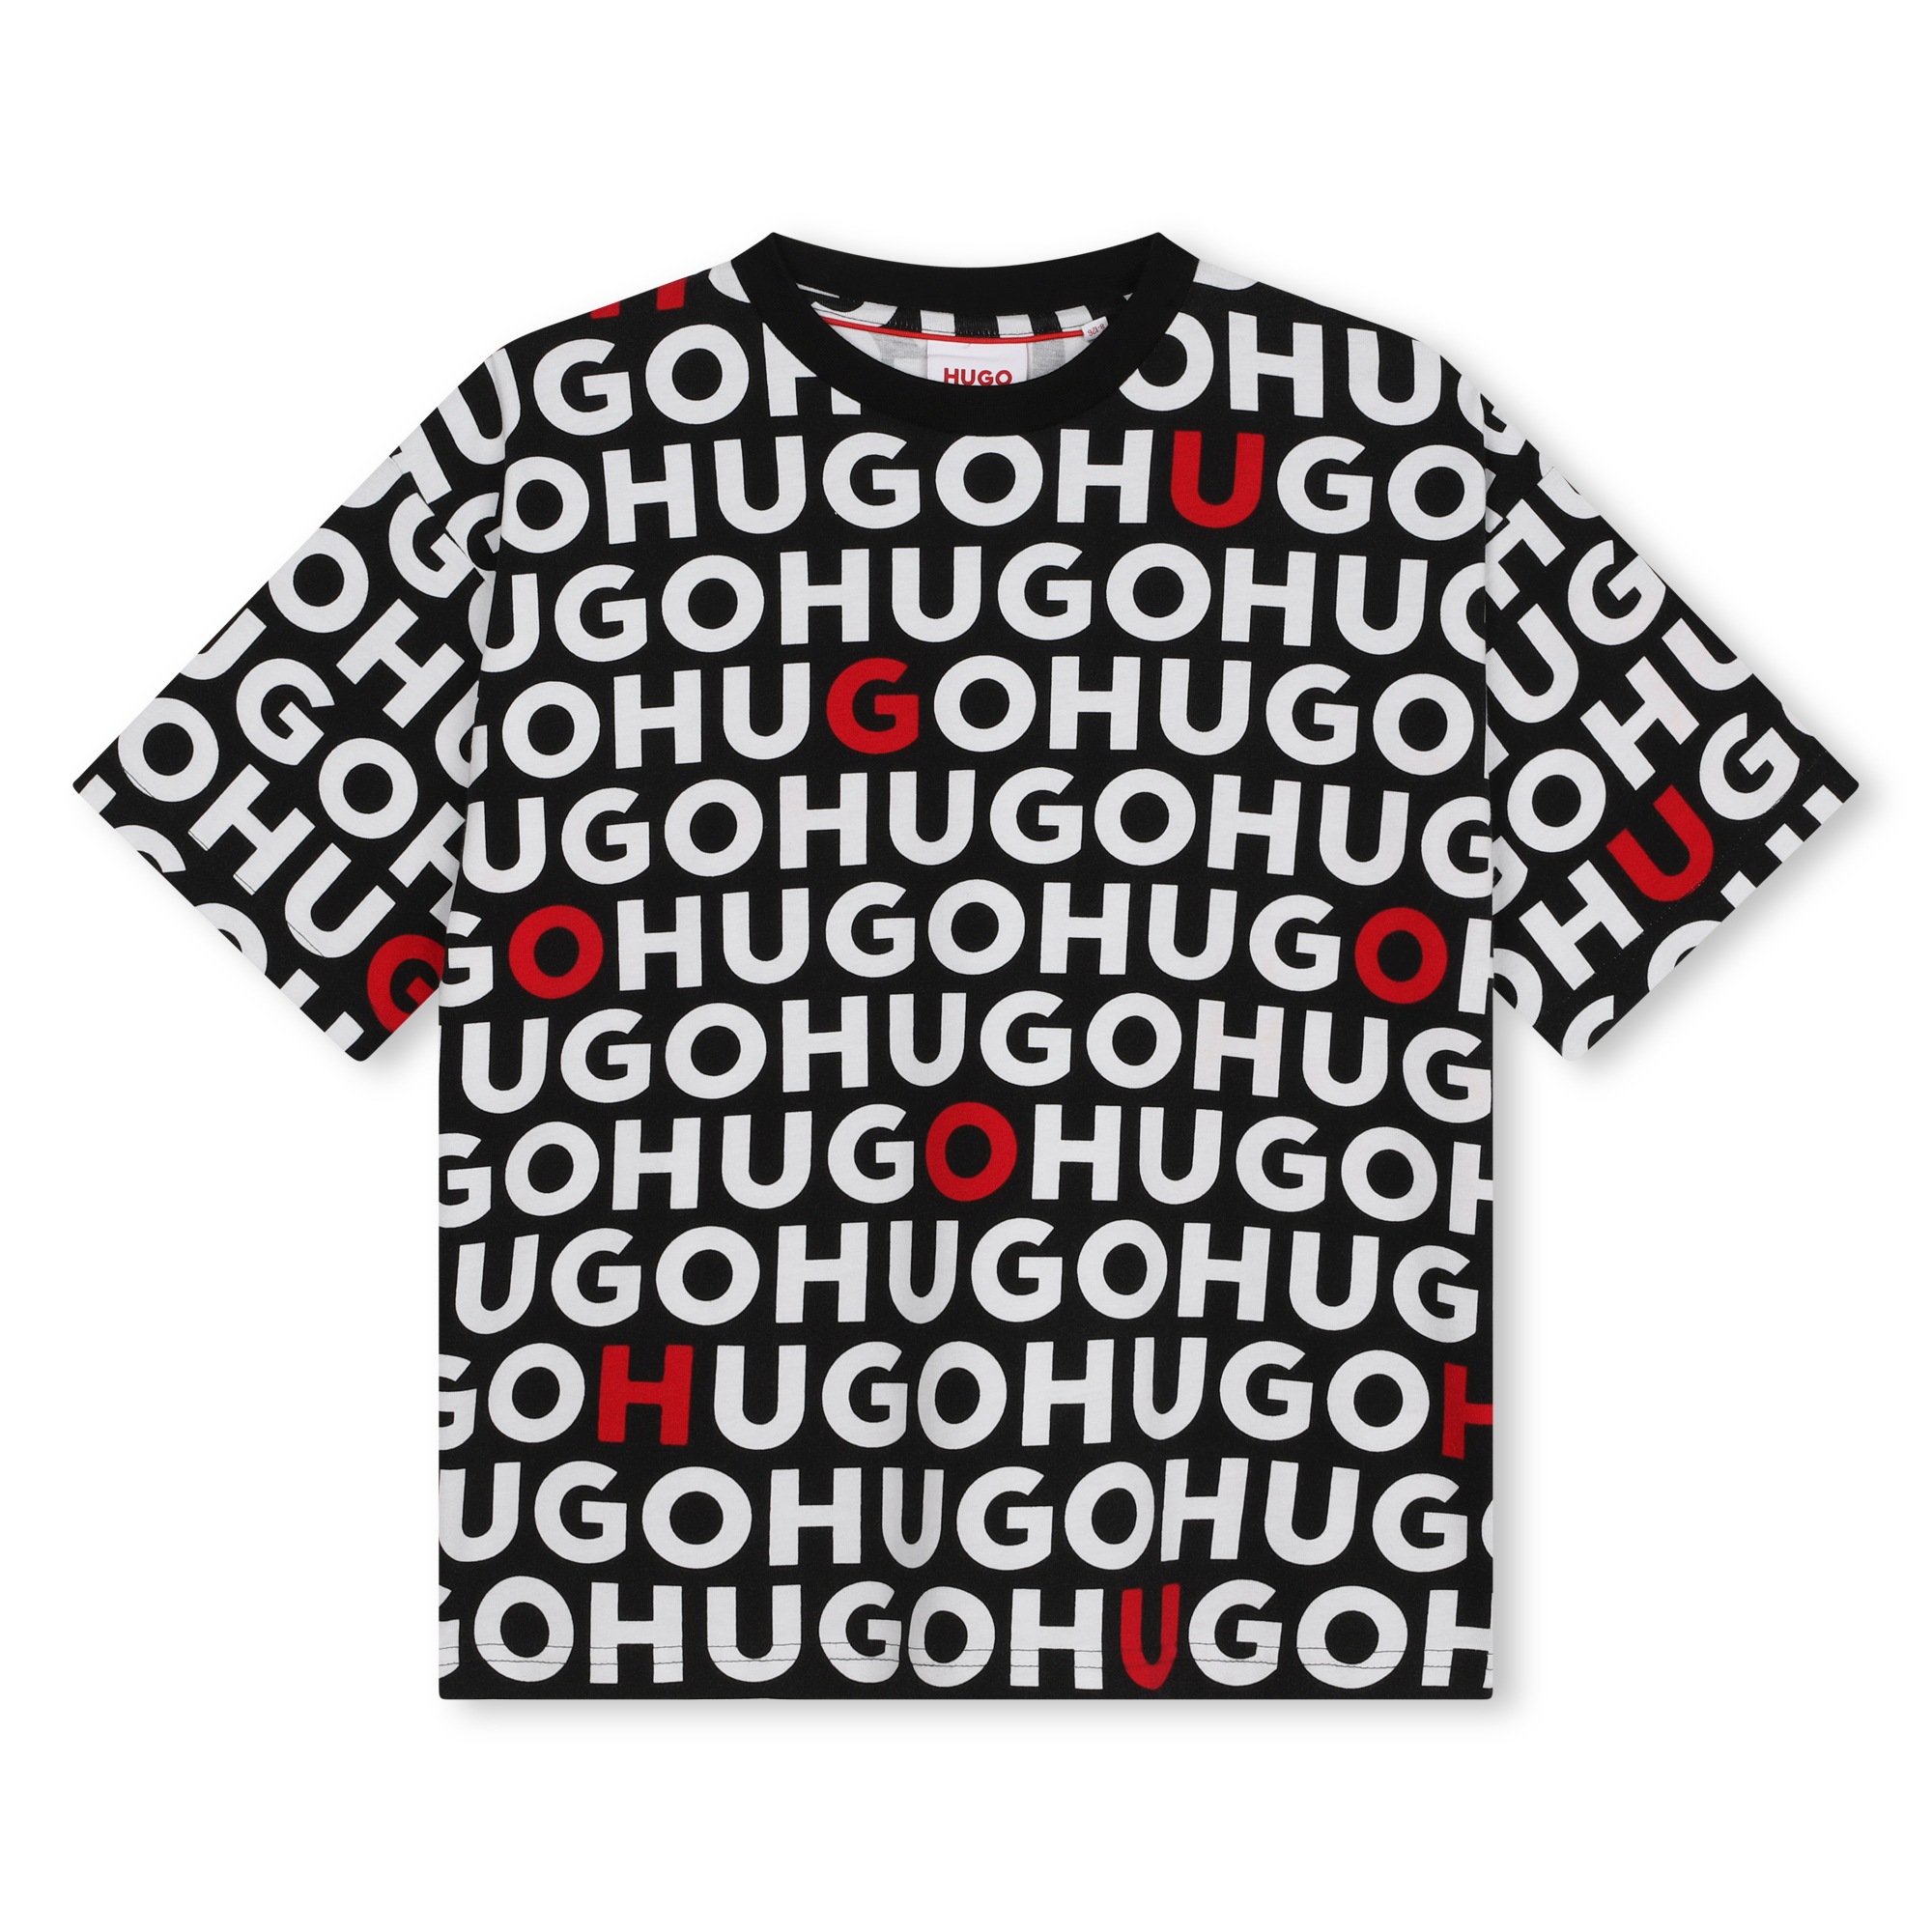 Printed cotton T-shirt HUGO for BOY